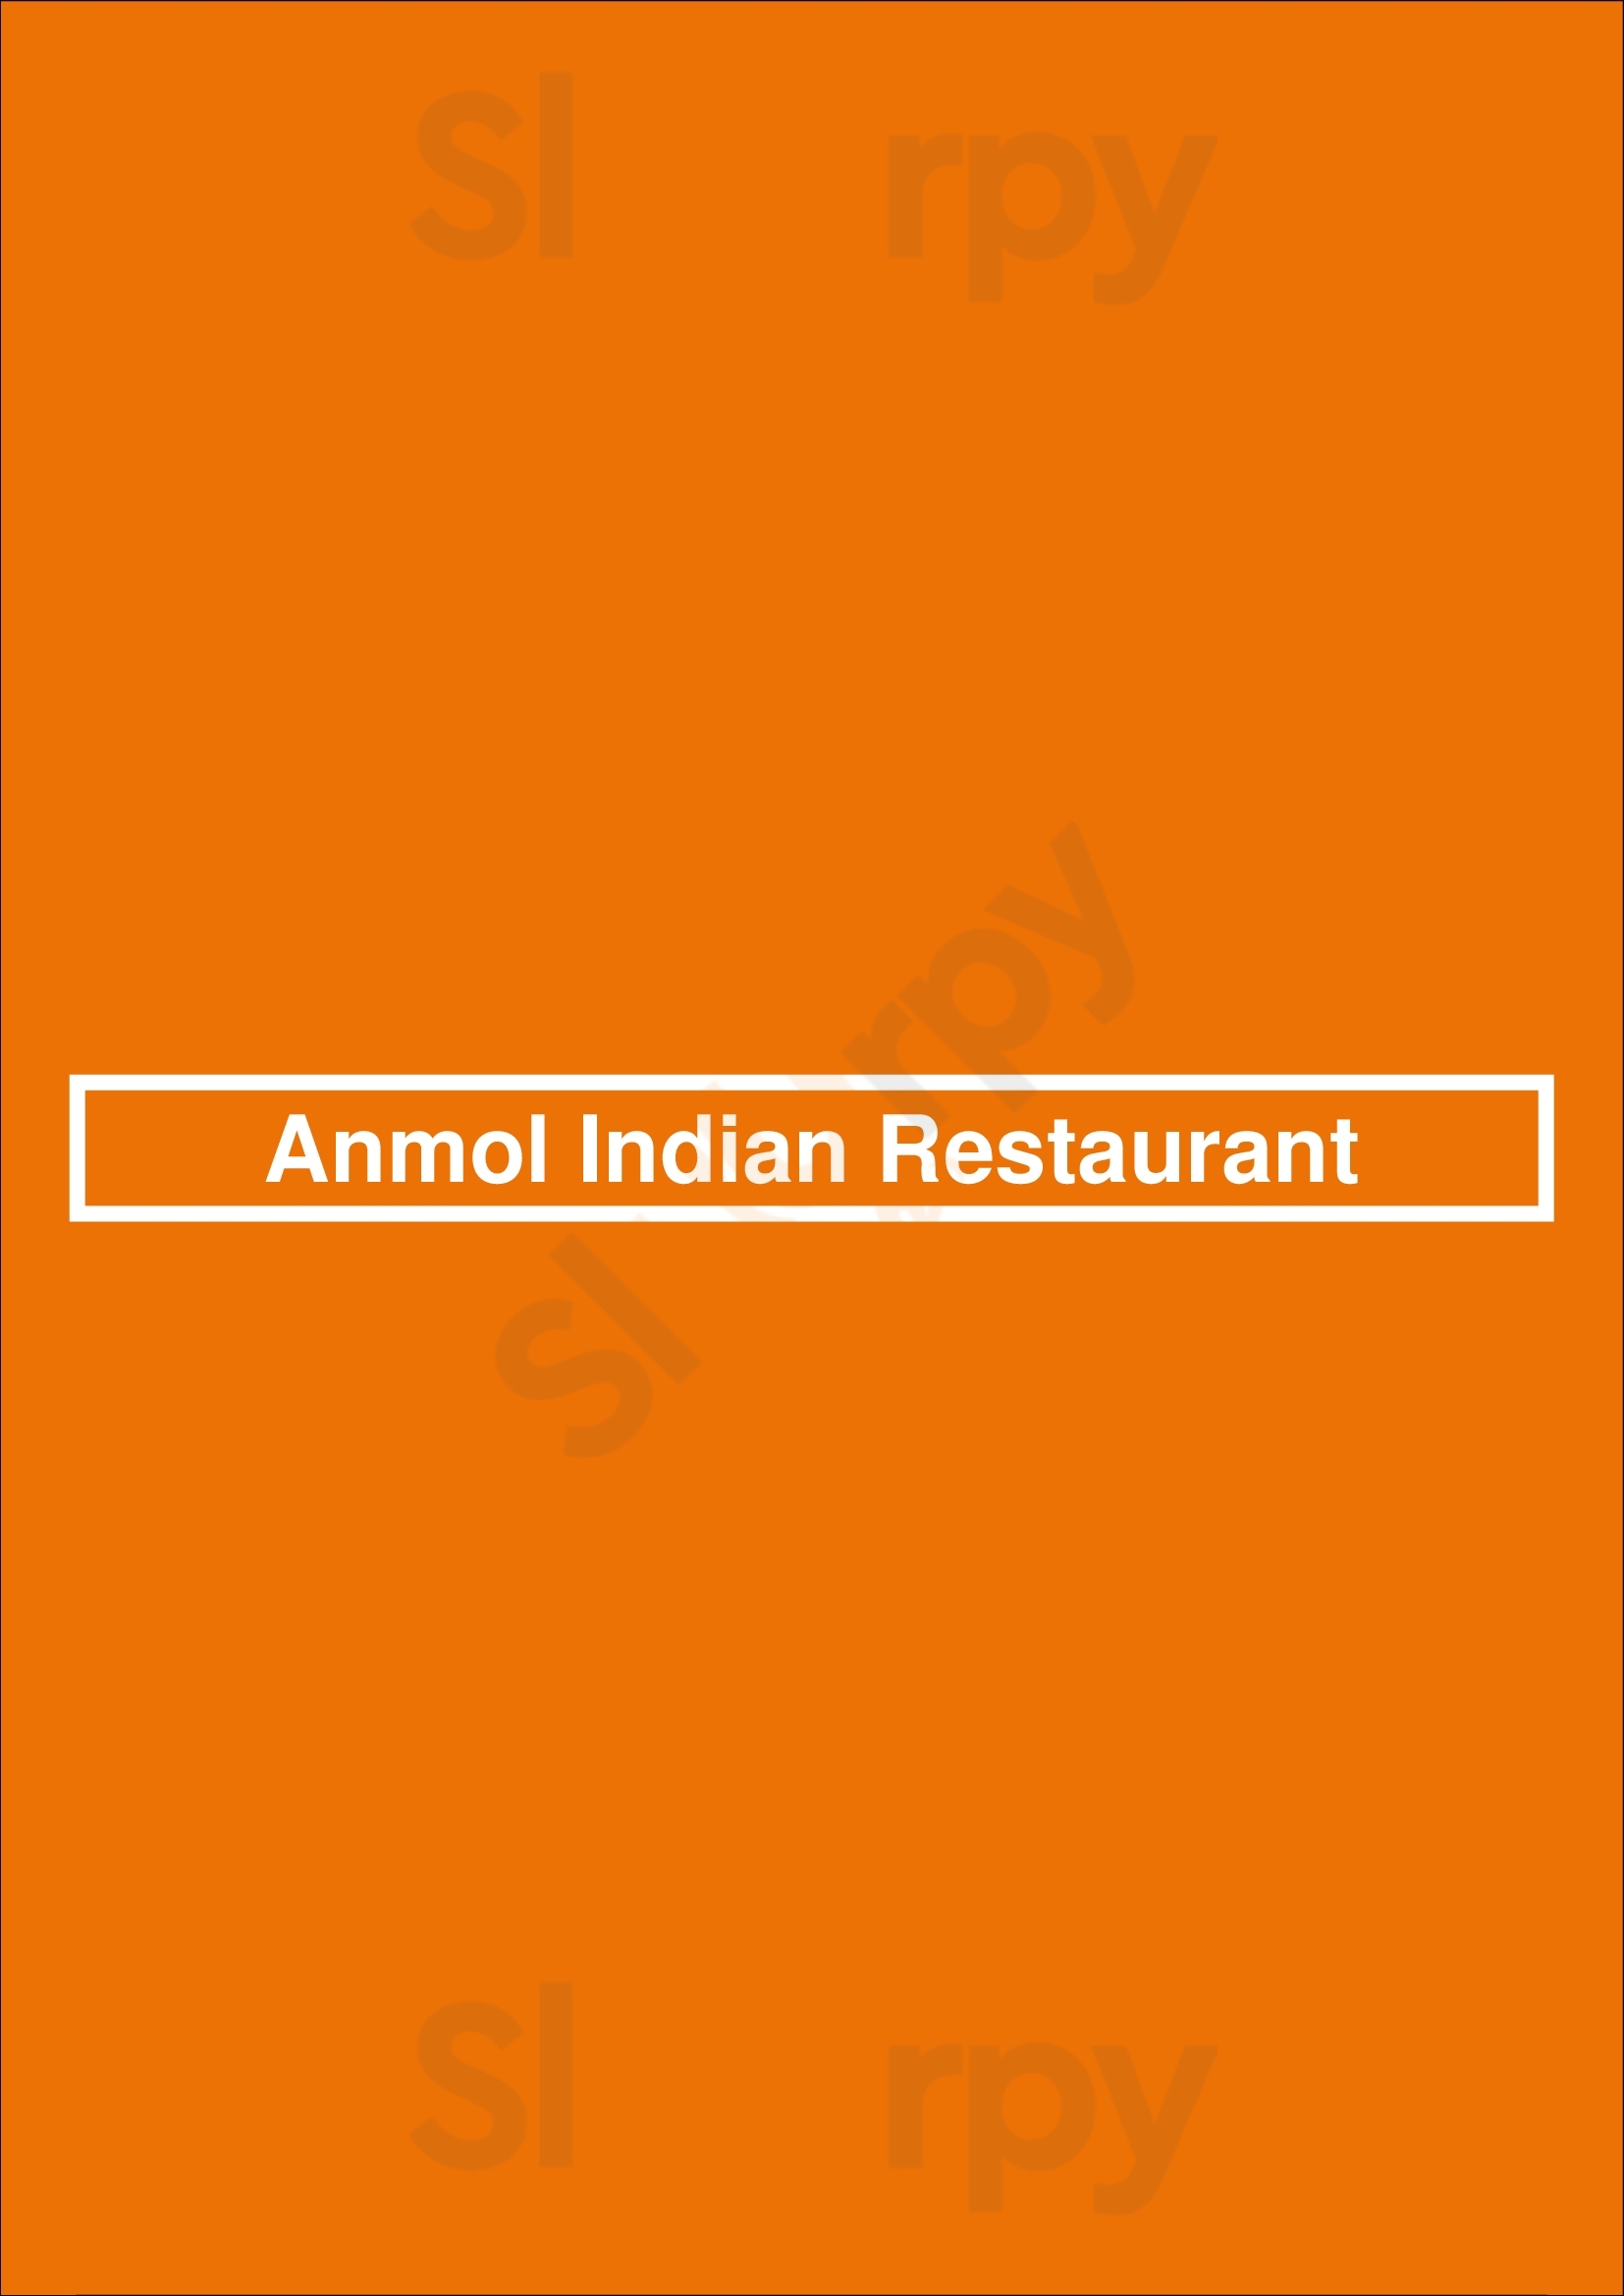 Anmol Indian Restaurant Amsterdam Menu - 1